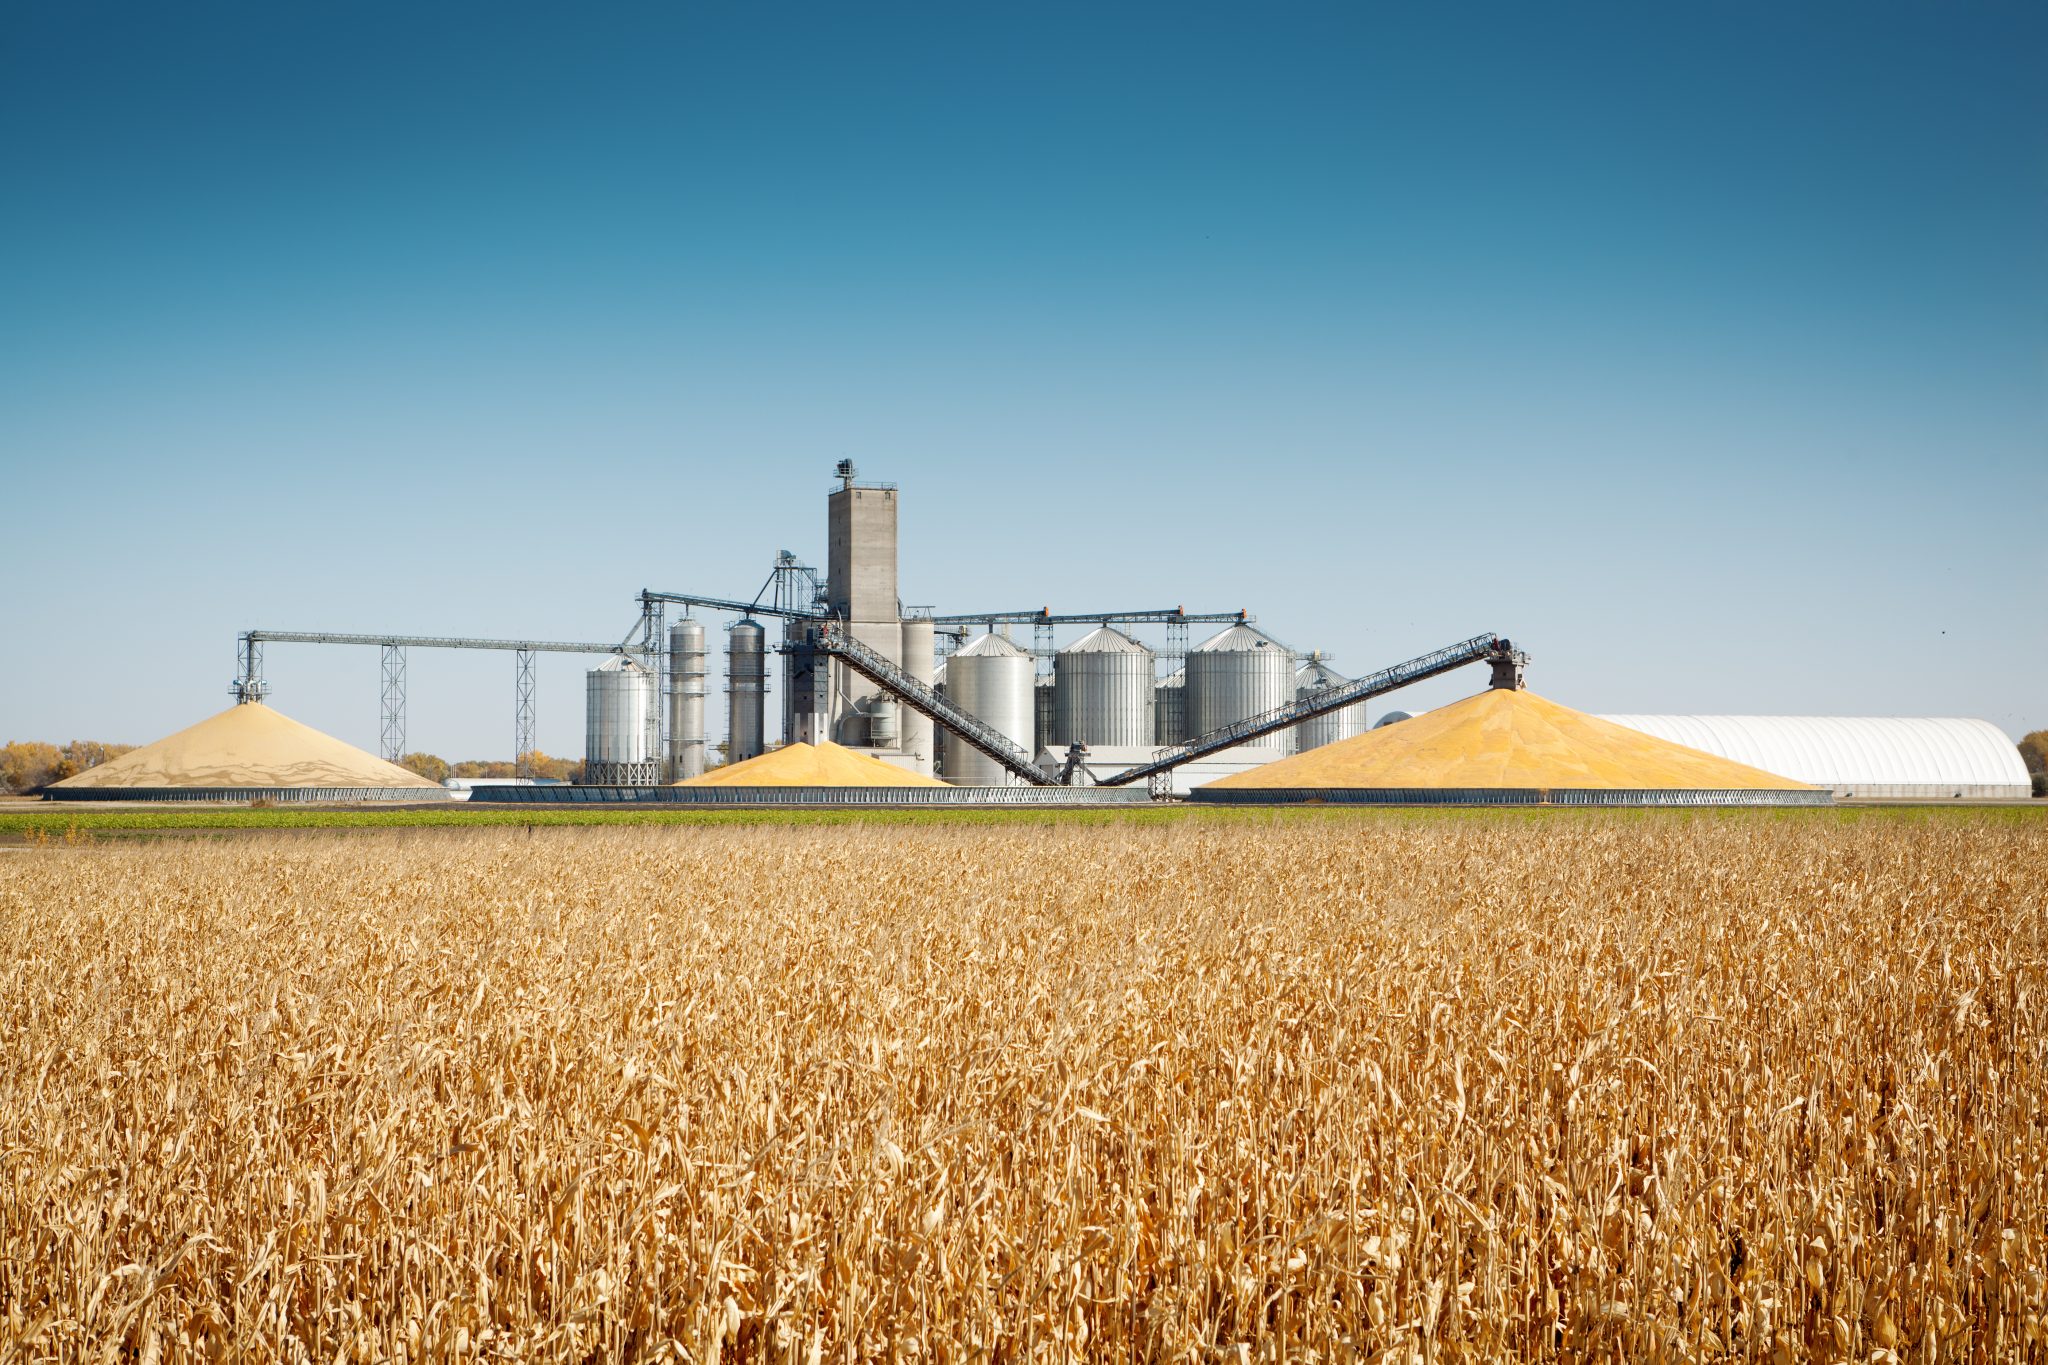 Storage grain bin silos in a field of matured corn crop in harvest time.